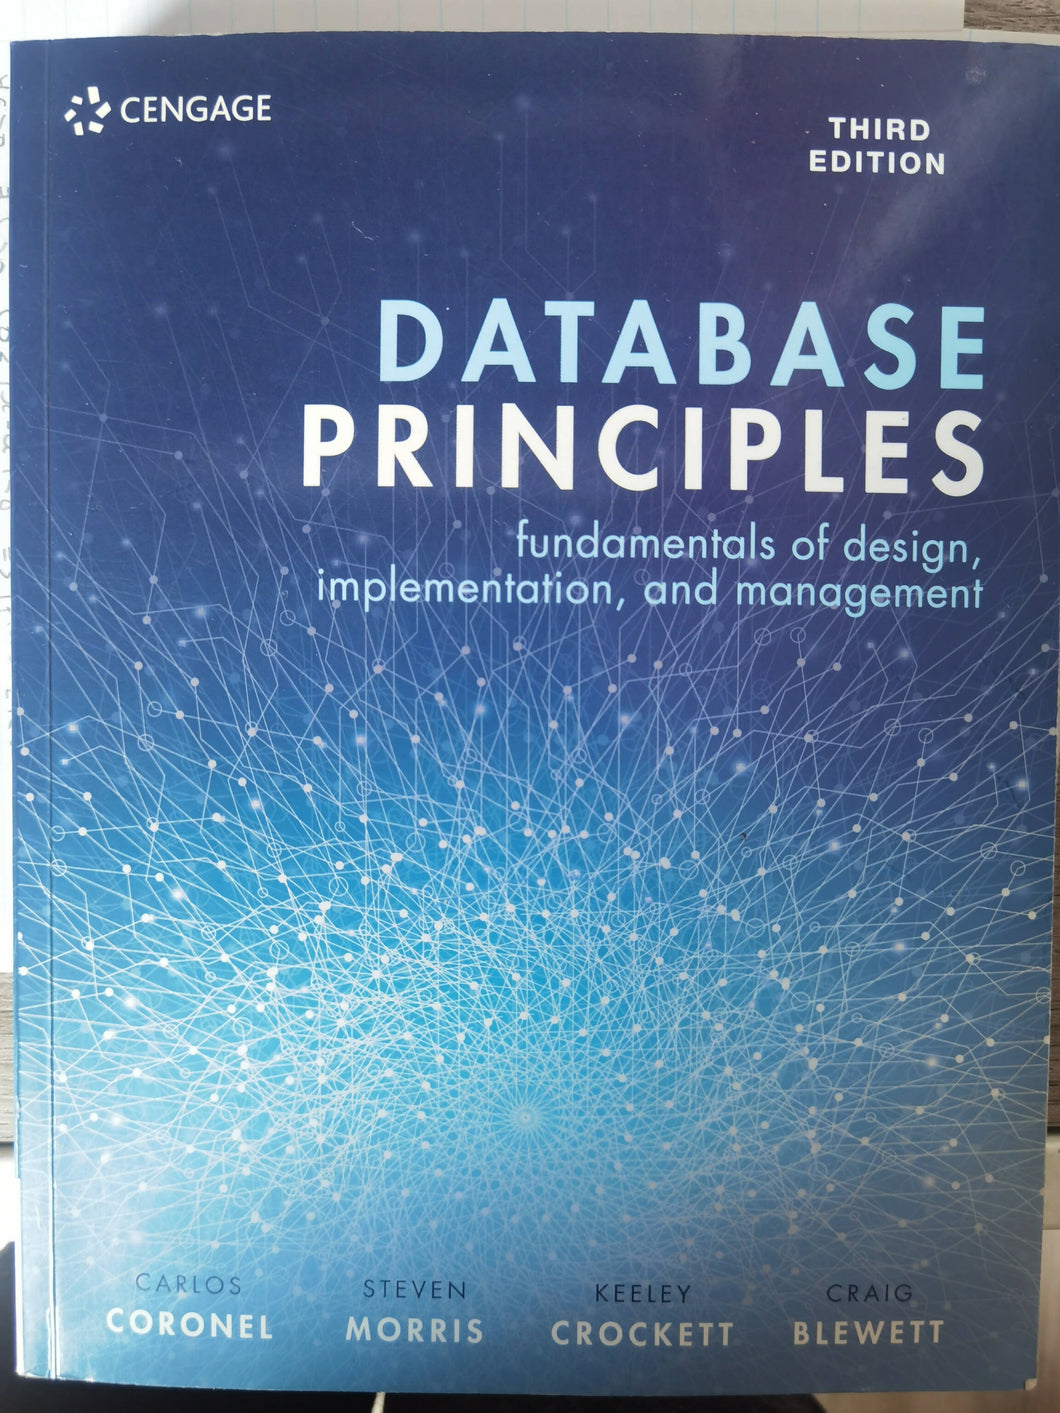 Database Principles